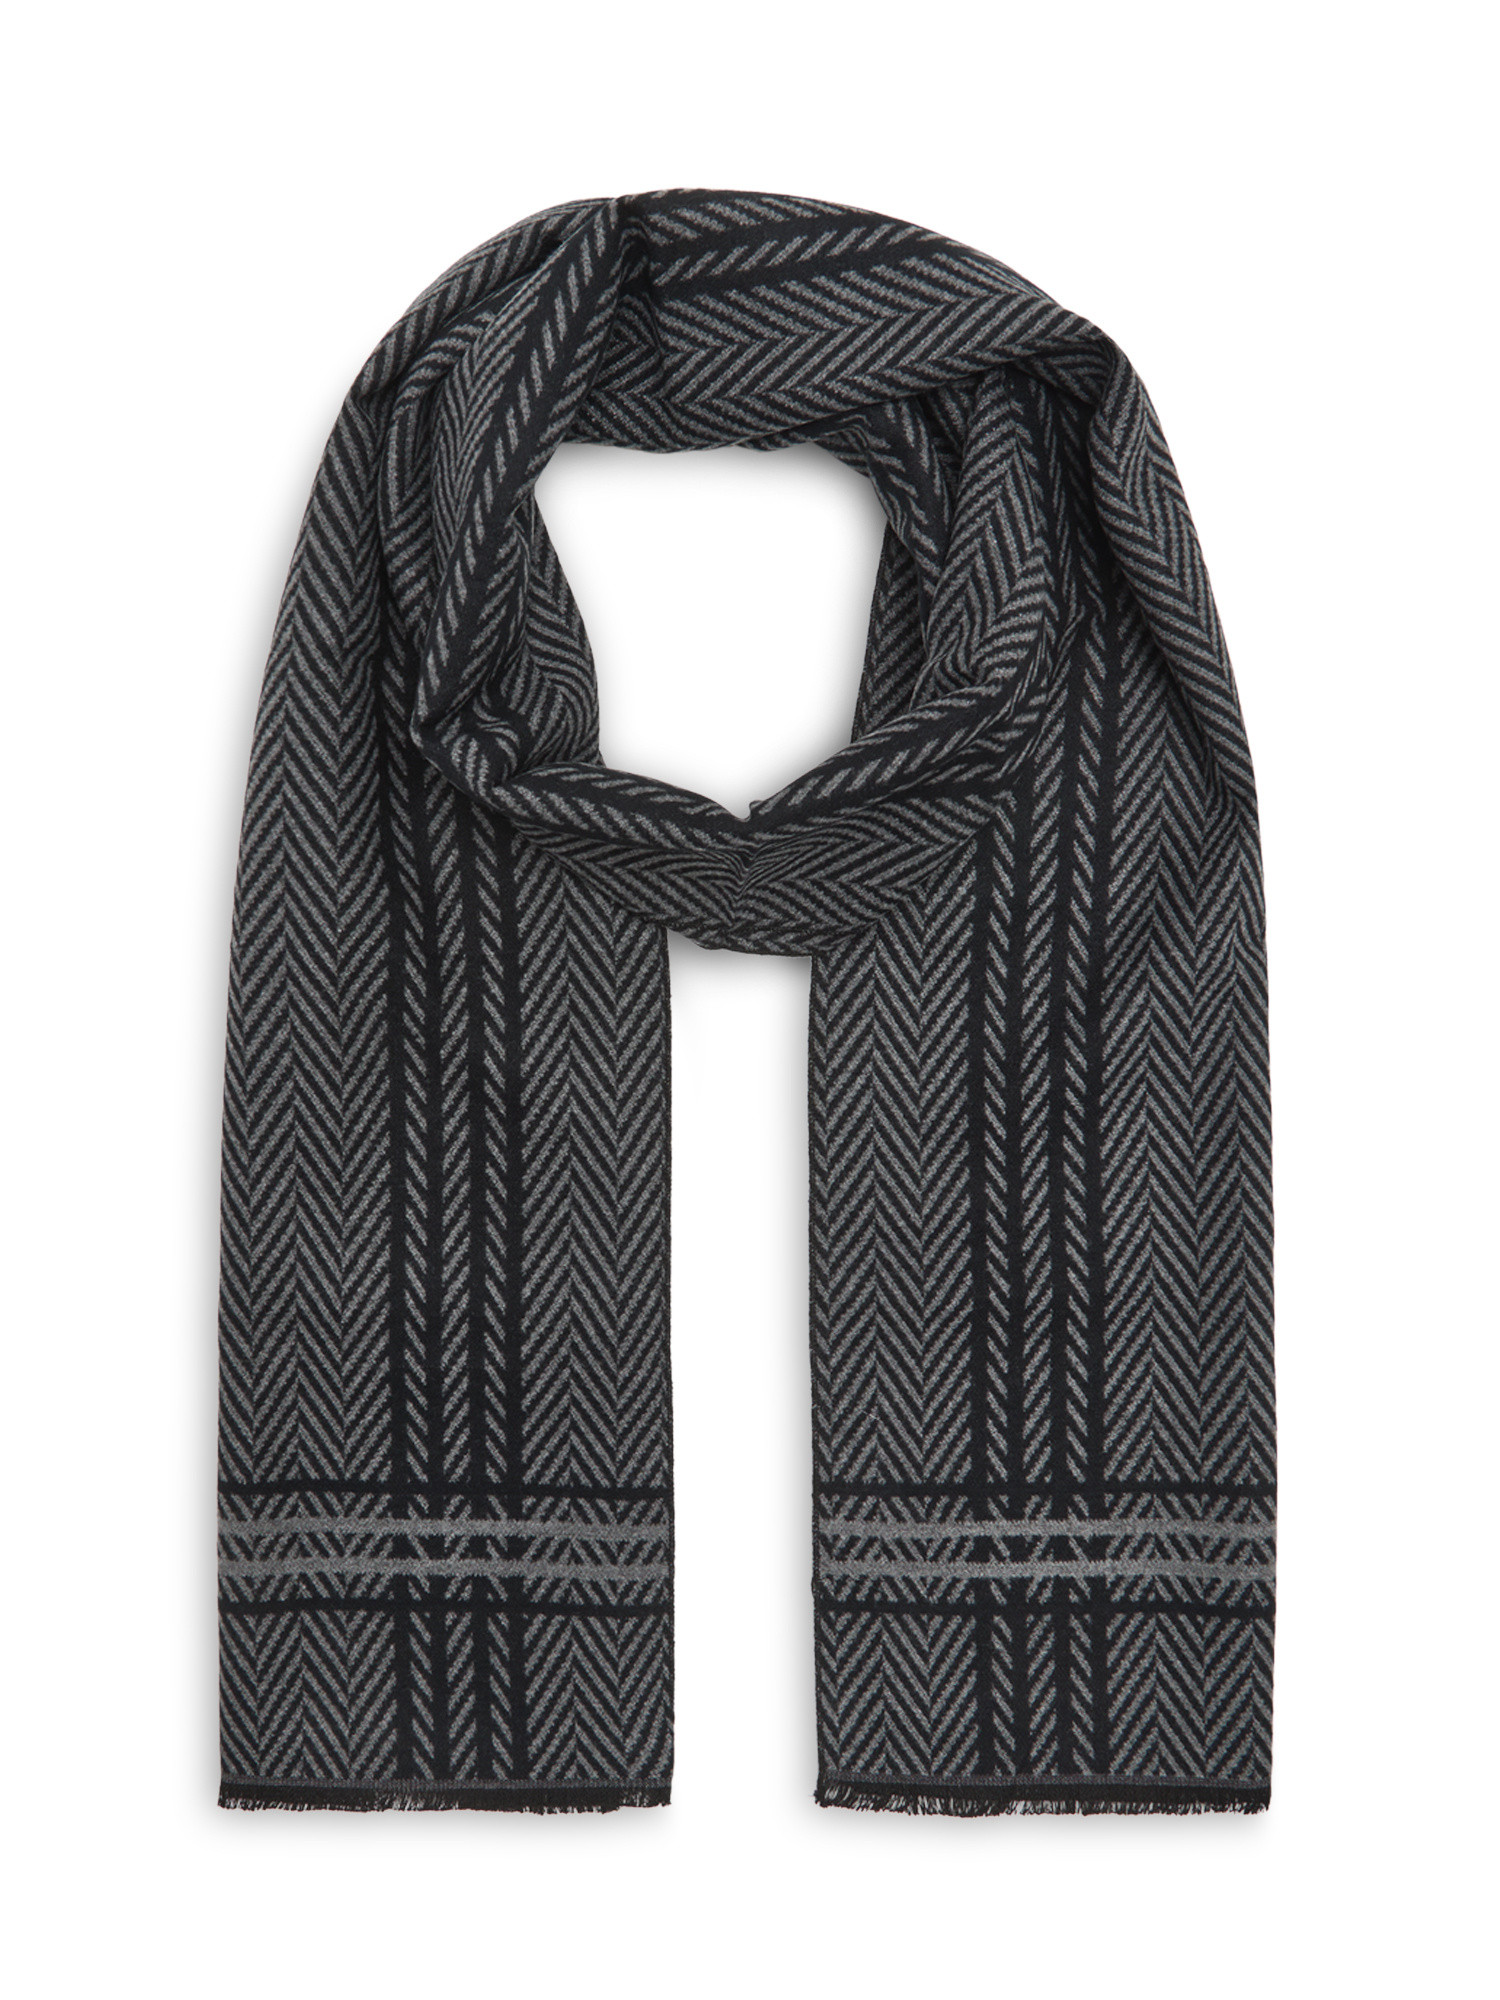 Luca D'Altieri - Herringbone viscose scarf, Black, large image number 0